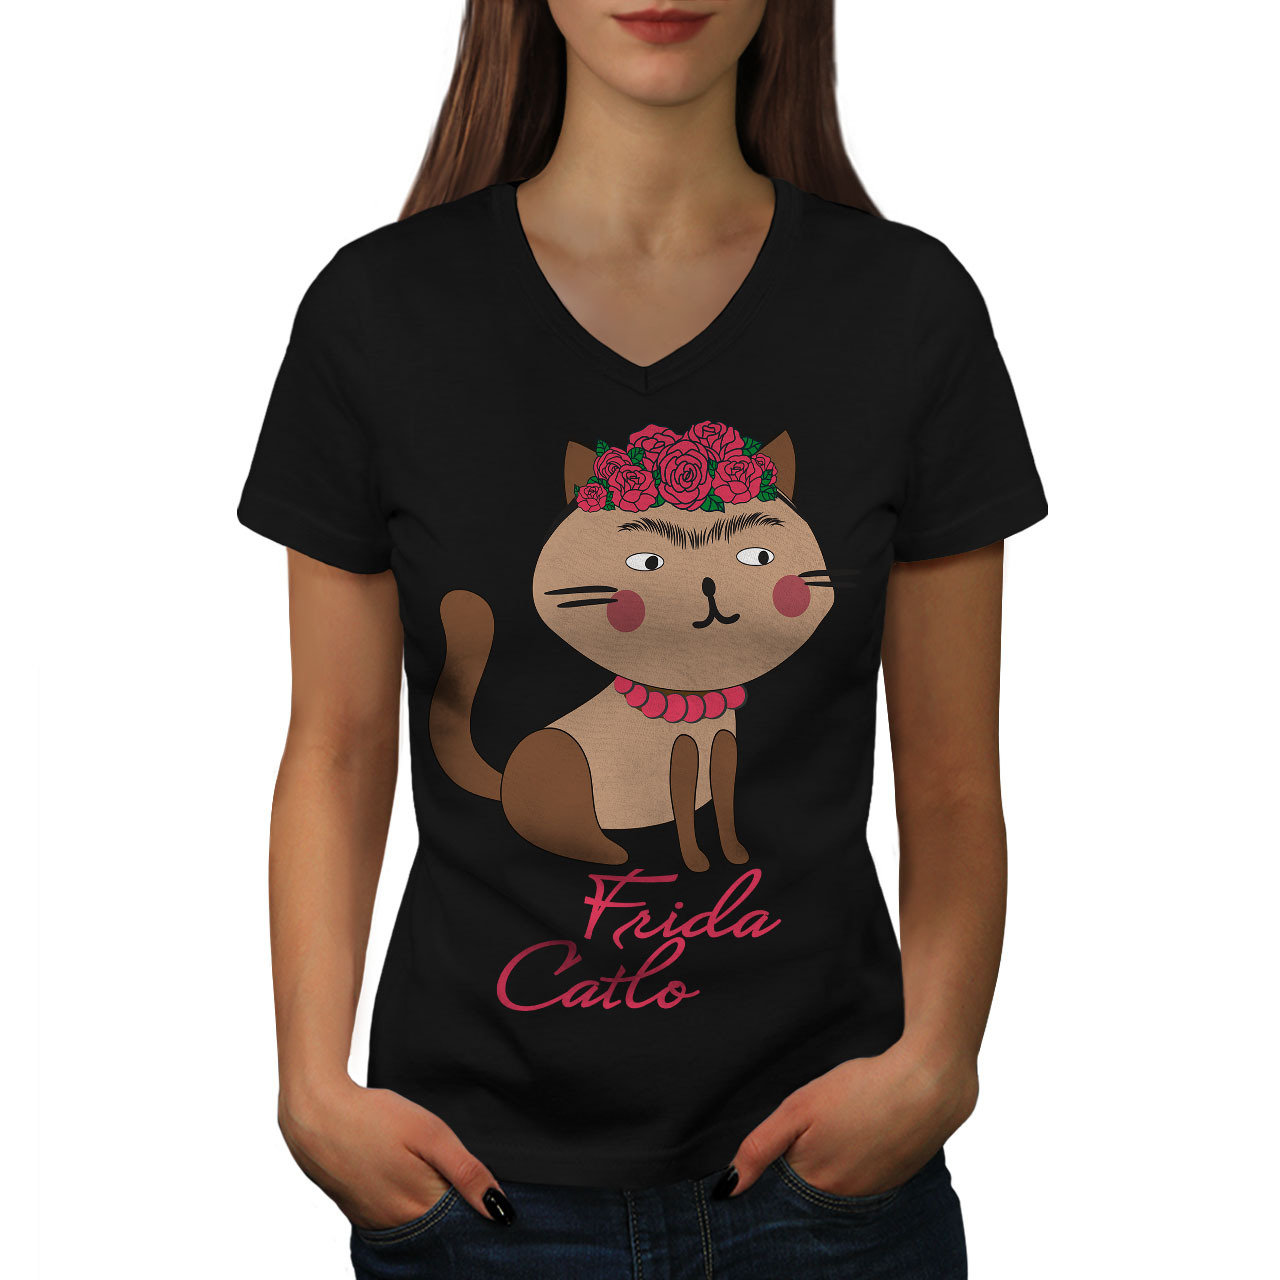 Primary image for Frida Kahlo Cat Shirt Funny Women V-Neck T-shirt